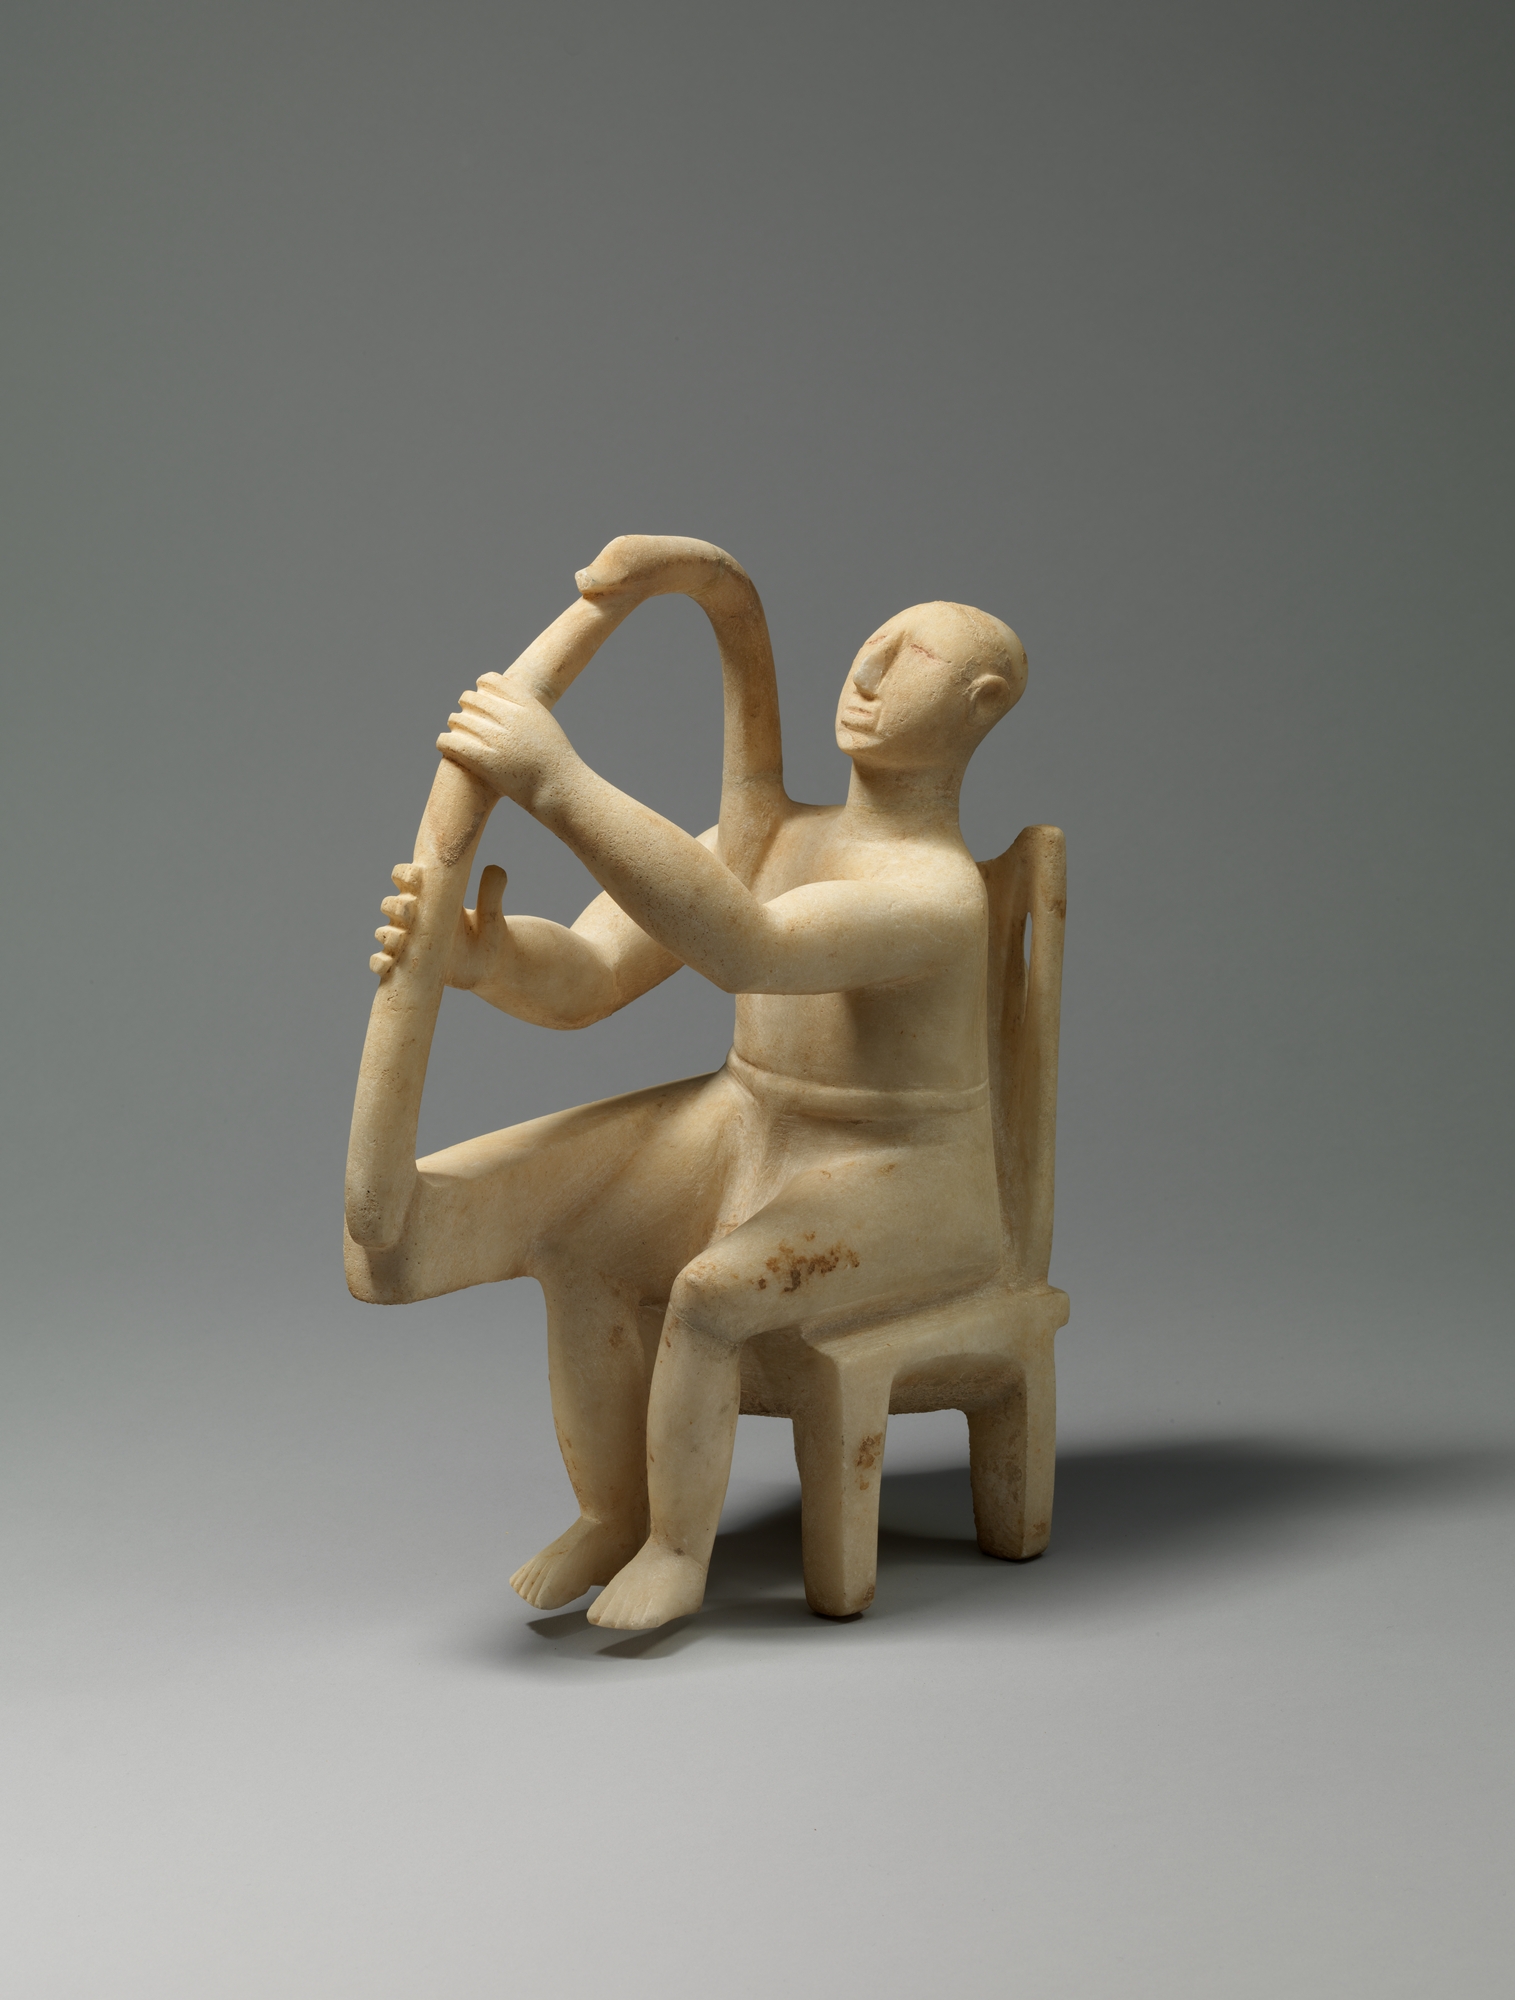 Tocador de Harpa das Cíclades by Artista Desconhecido - 2800–2700 B.C. - 29.21 cm 